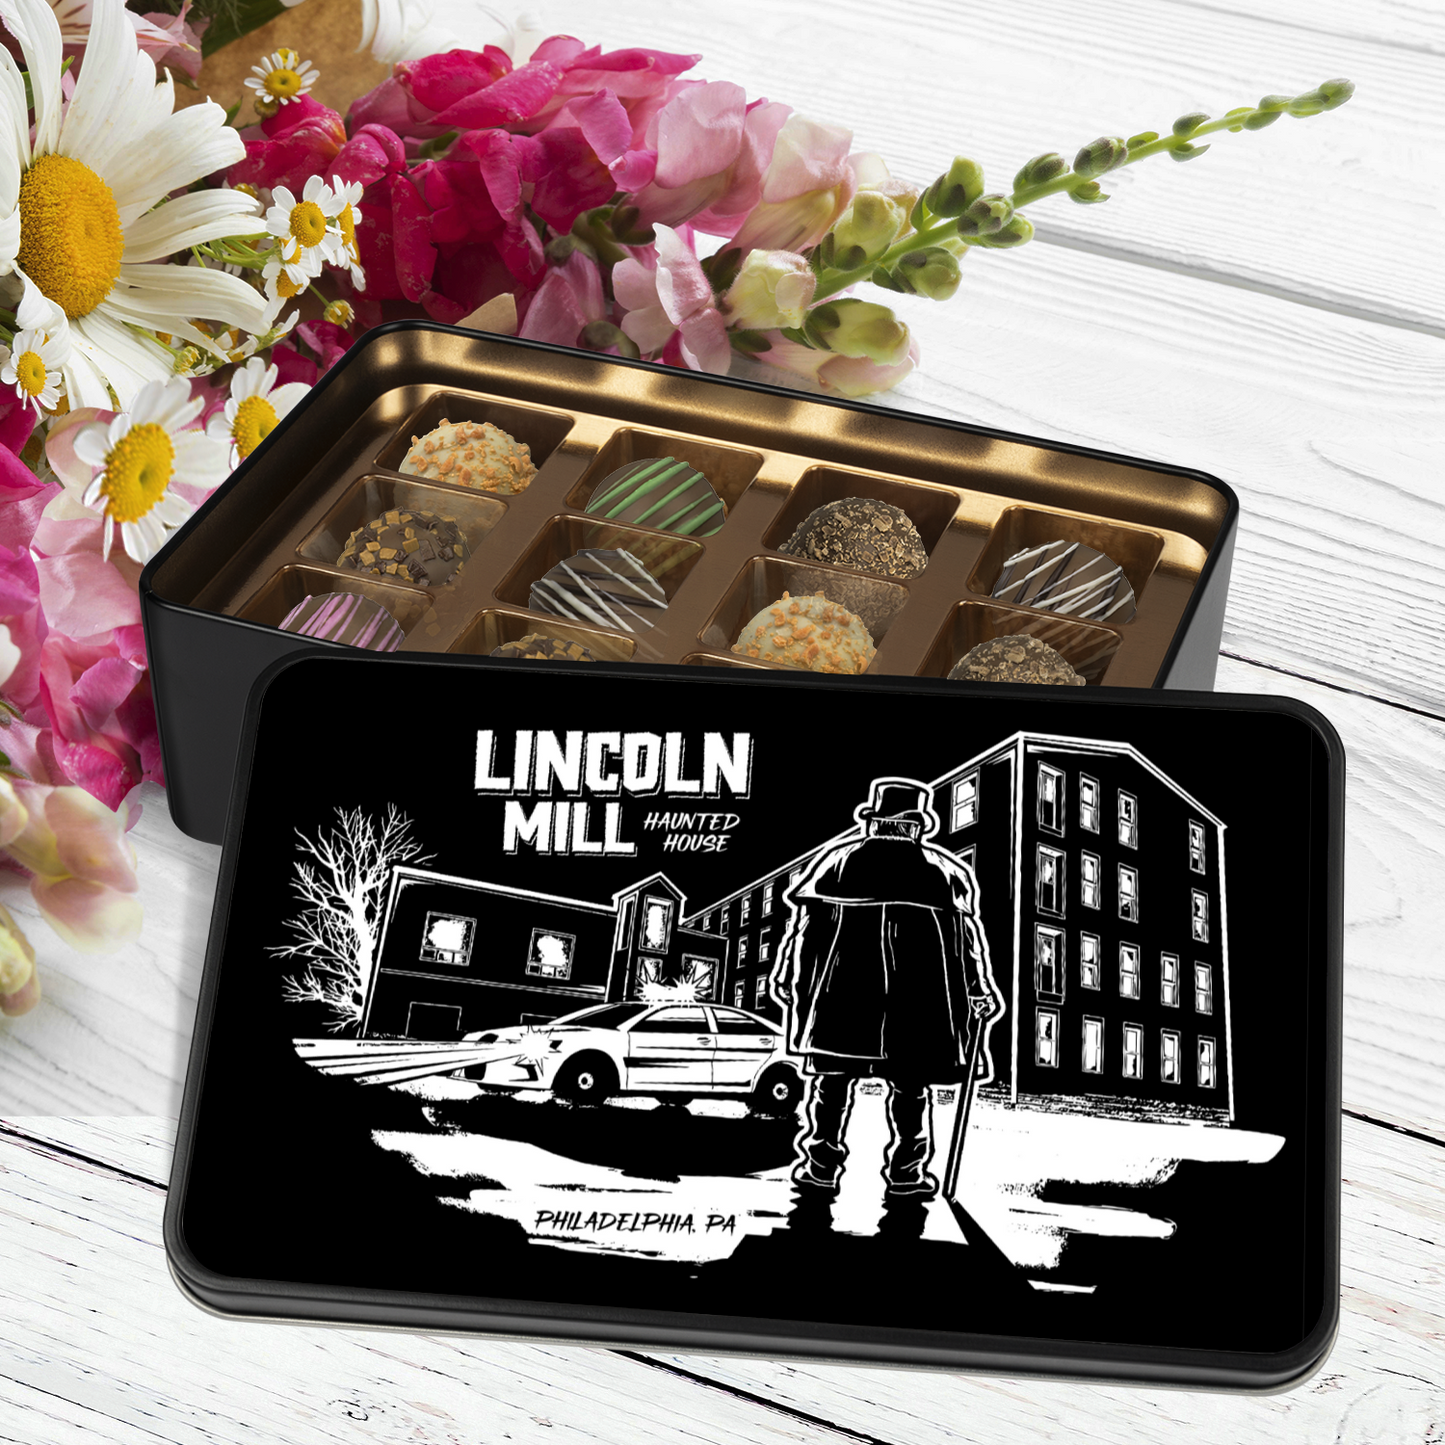 Lincoln Mill Haunted House Chocolate Truffles - Mill Keepsake Tin